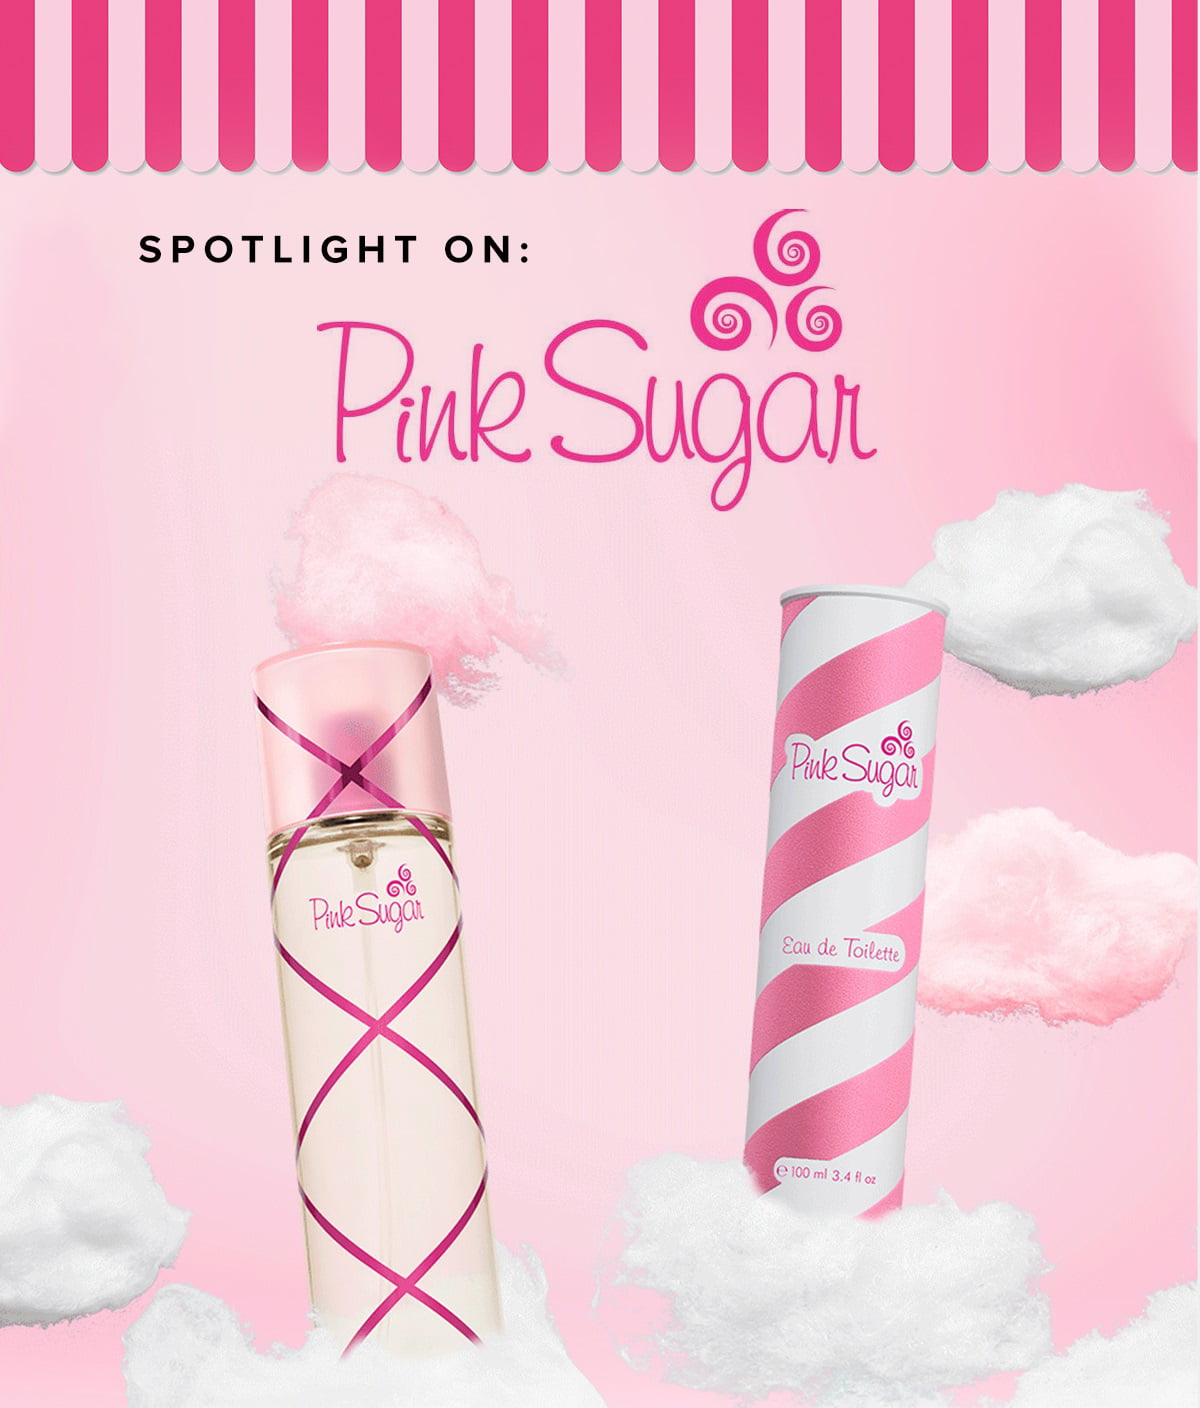 Pink Sugar By Aquolina 3.3 / 3.4 Oz EDT Spray Perfume For Women (NIB)